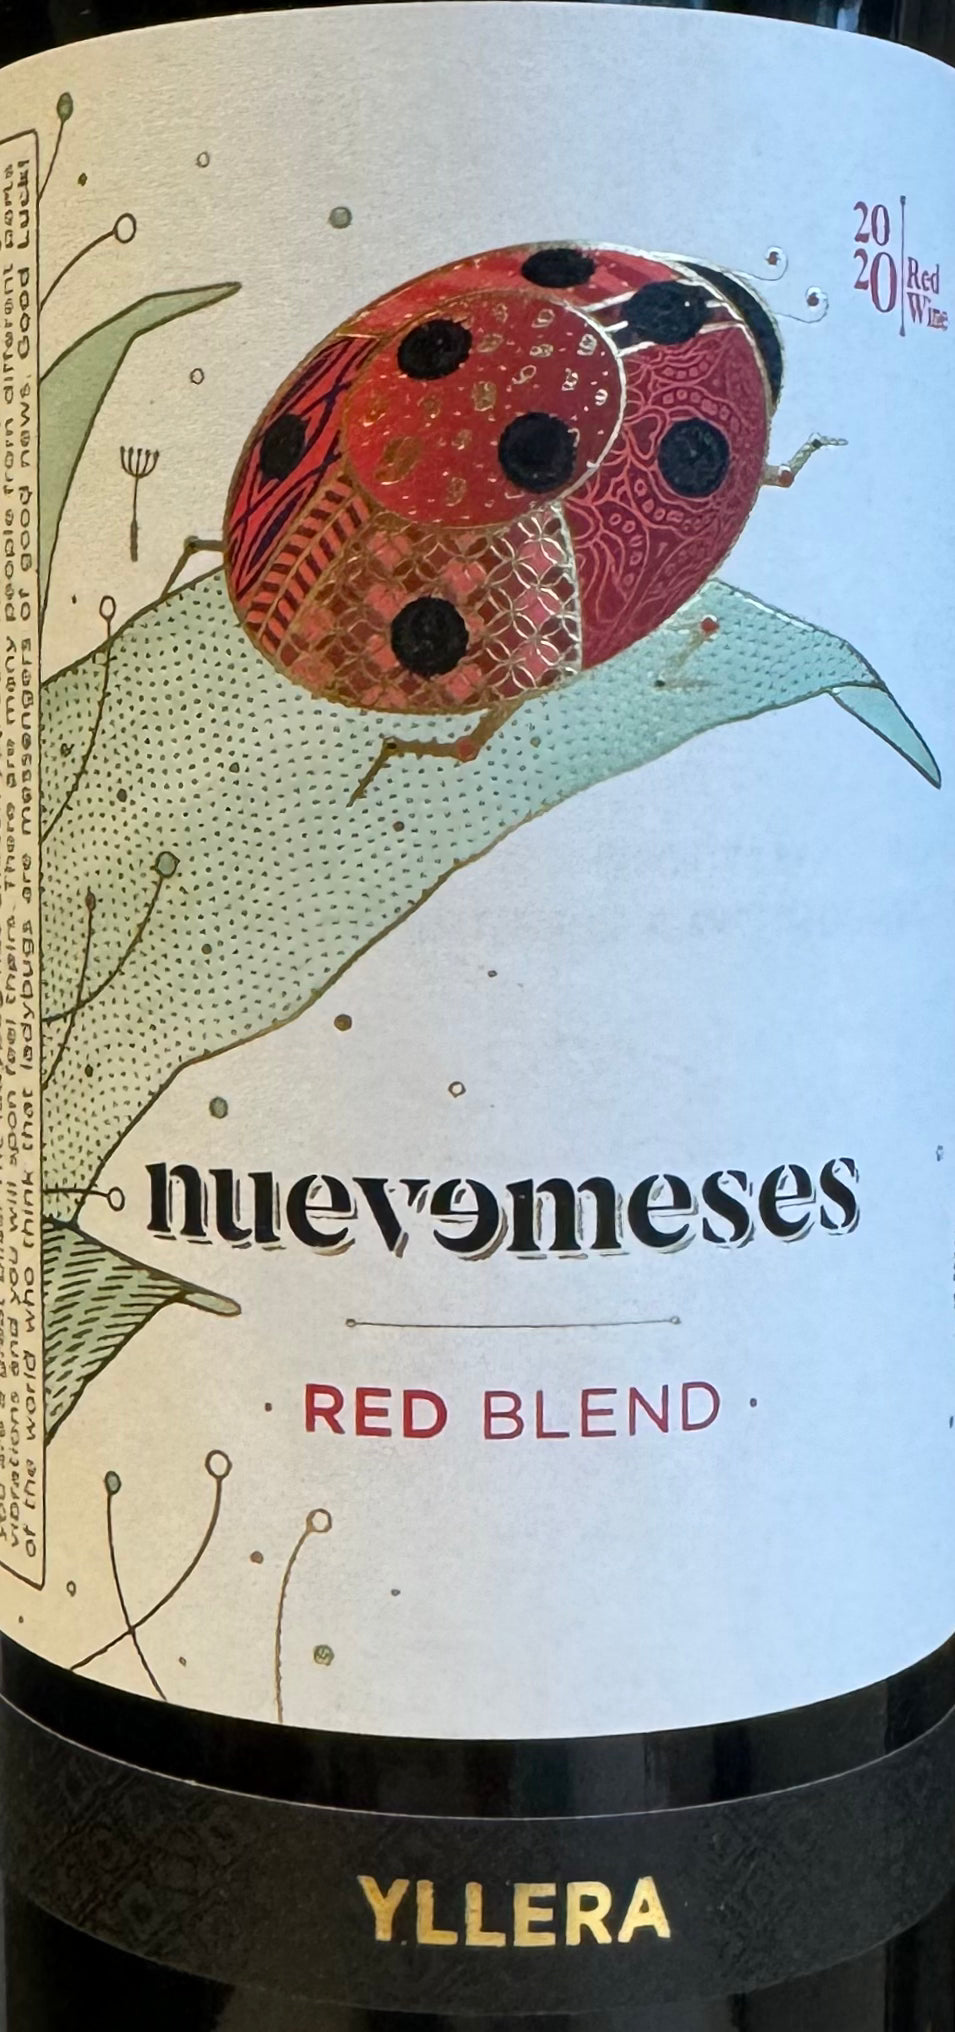 Yllera 'Nuevemeses' - Red Blend